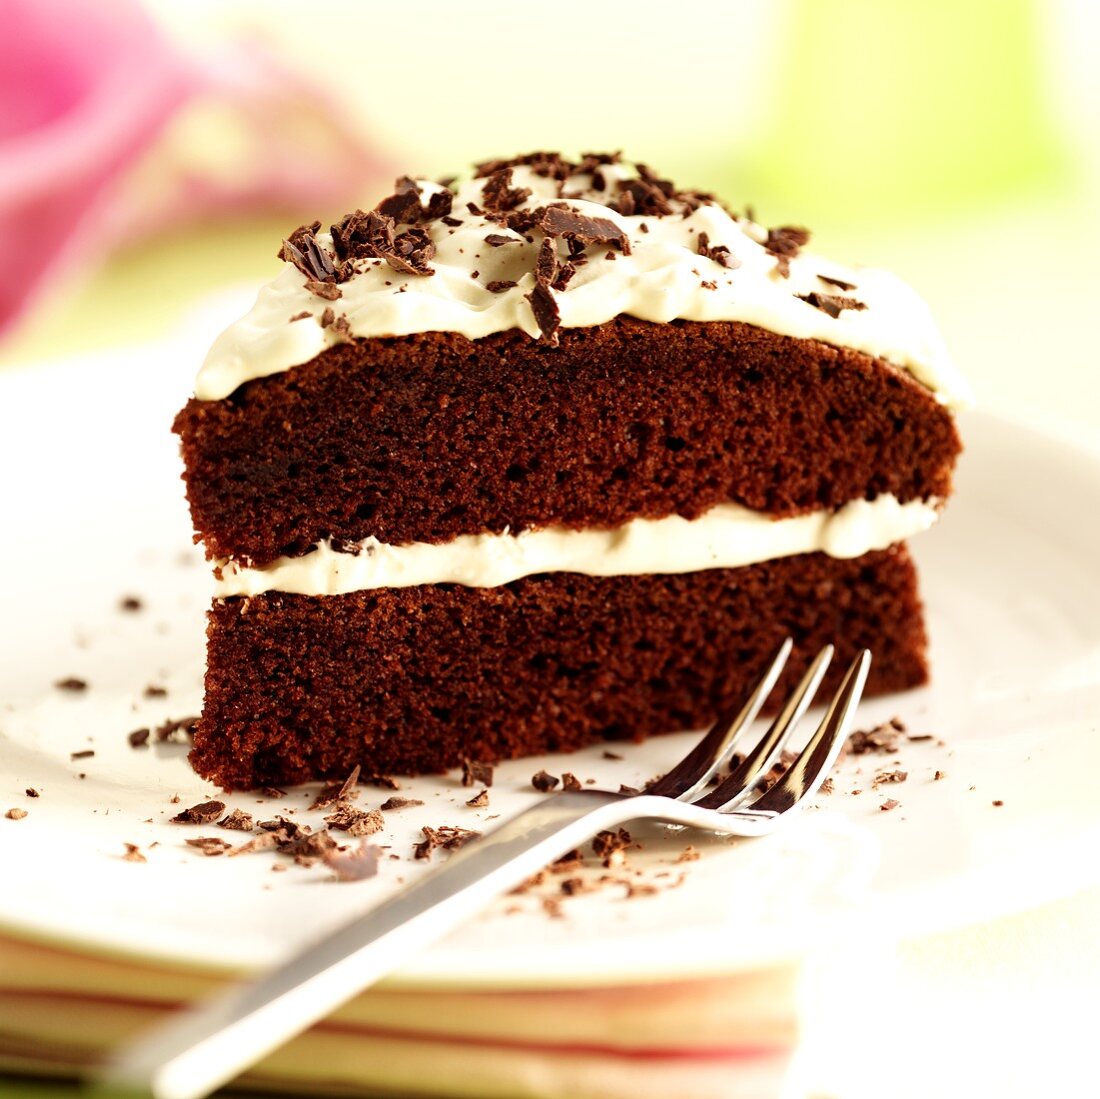 Piece of chocolate cake with cream